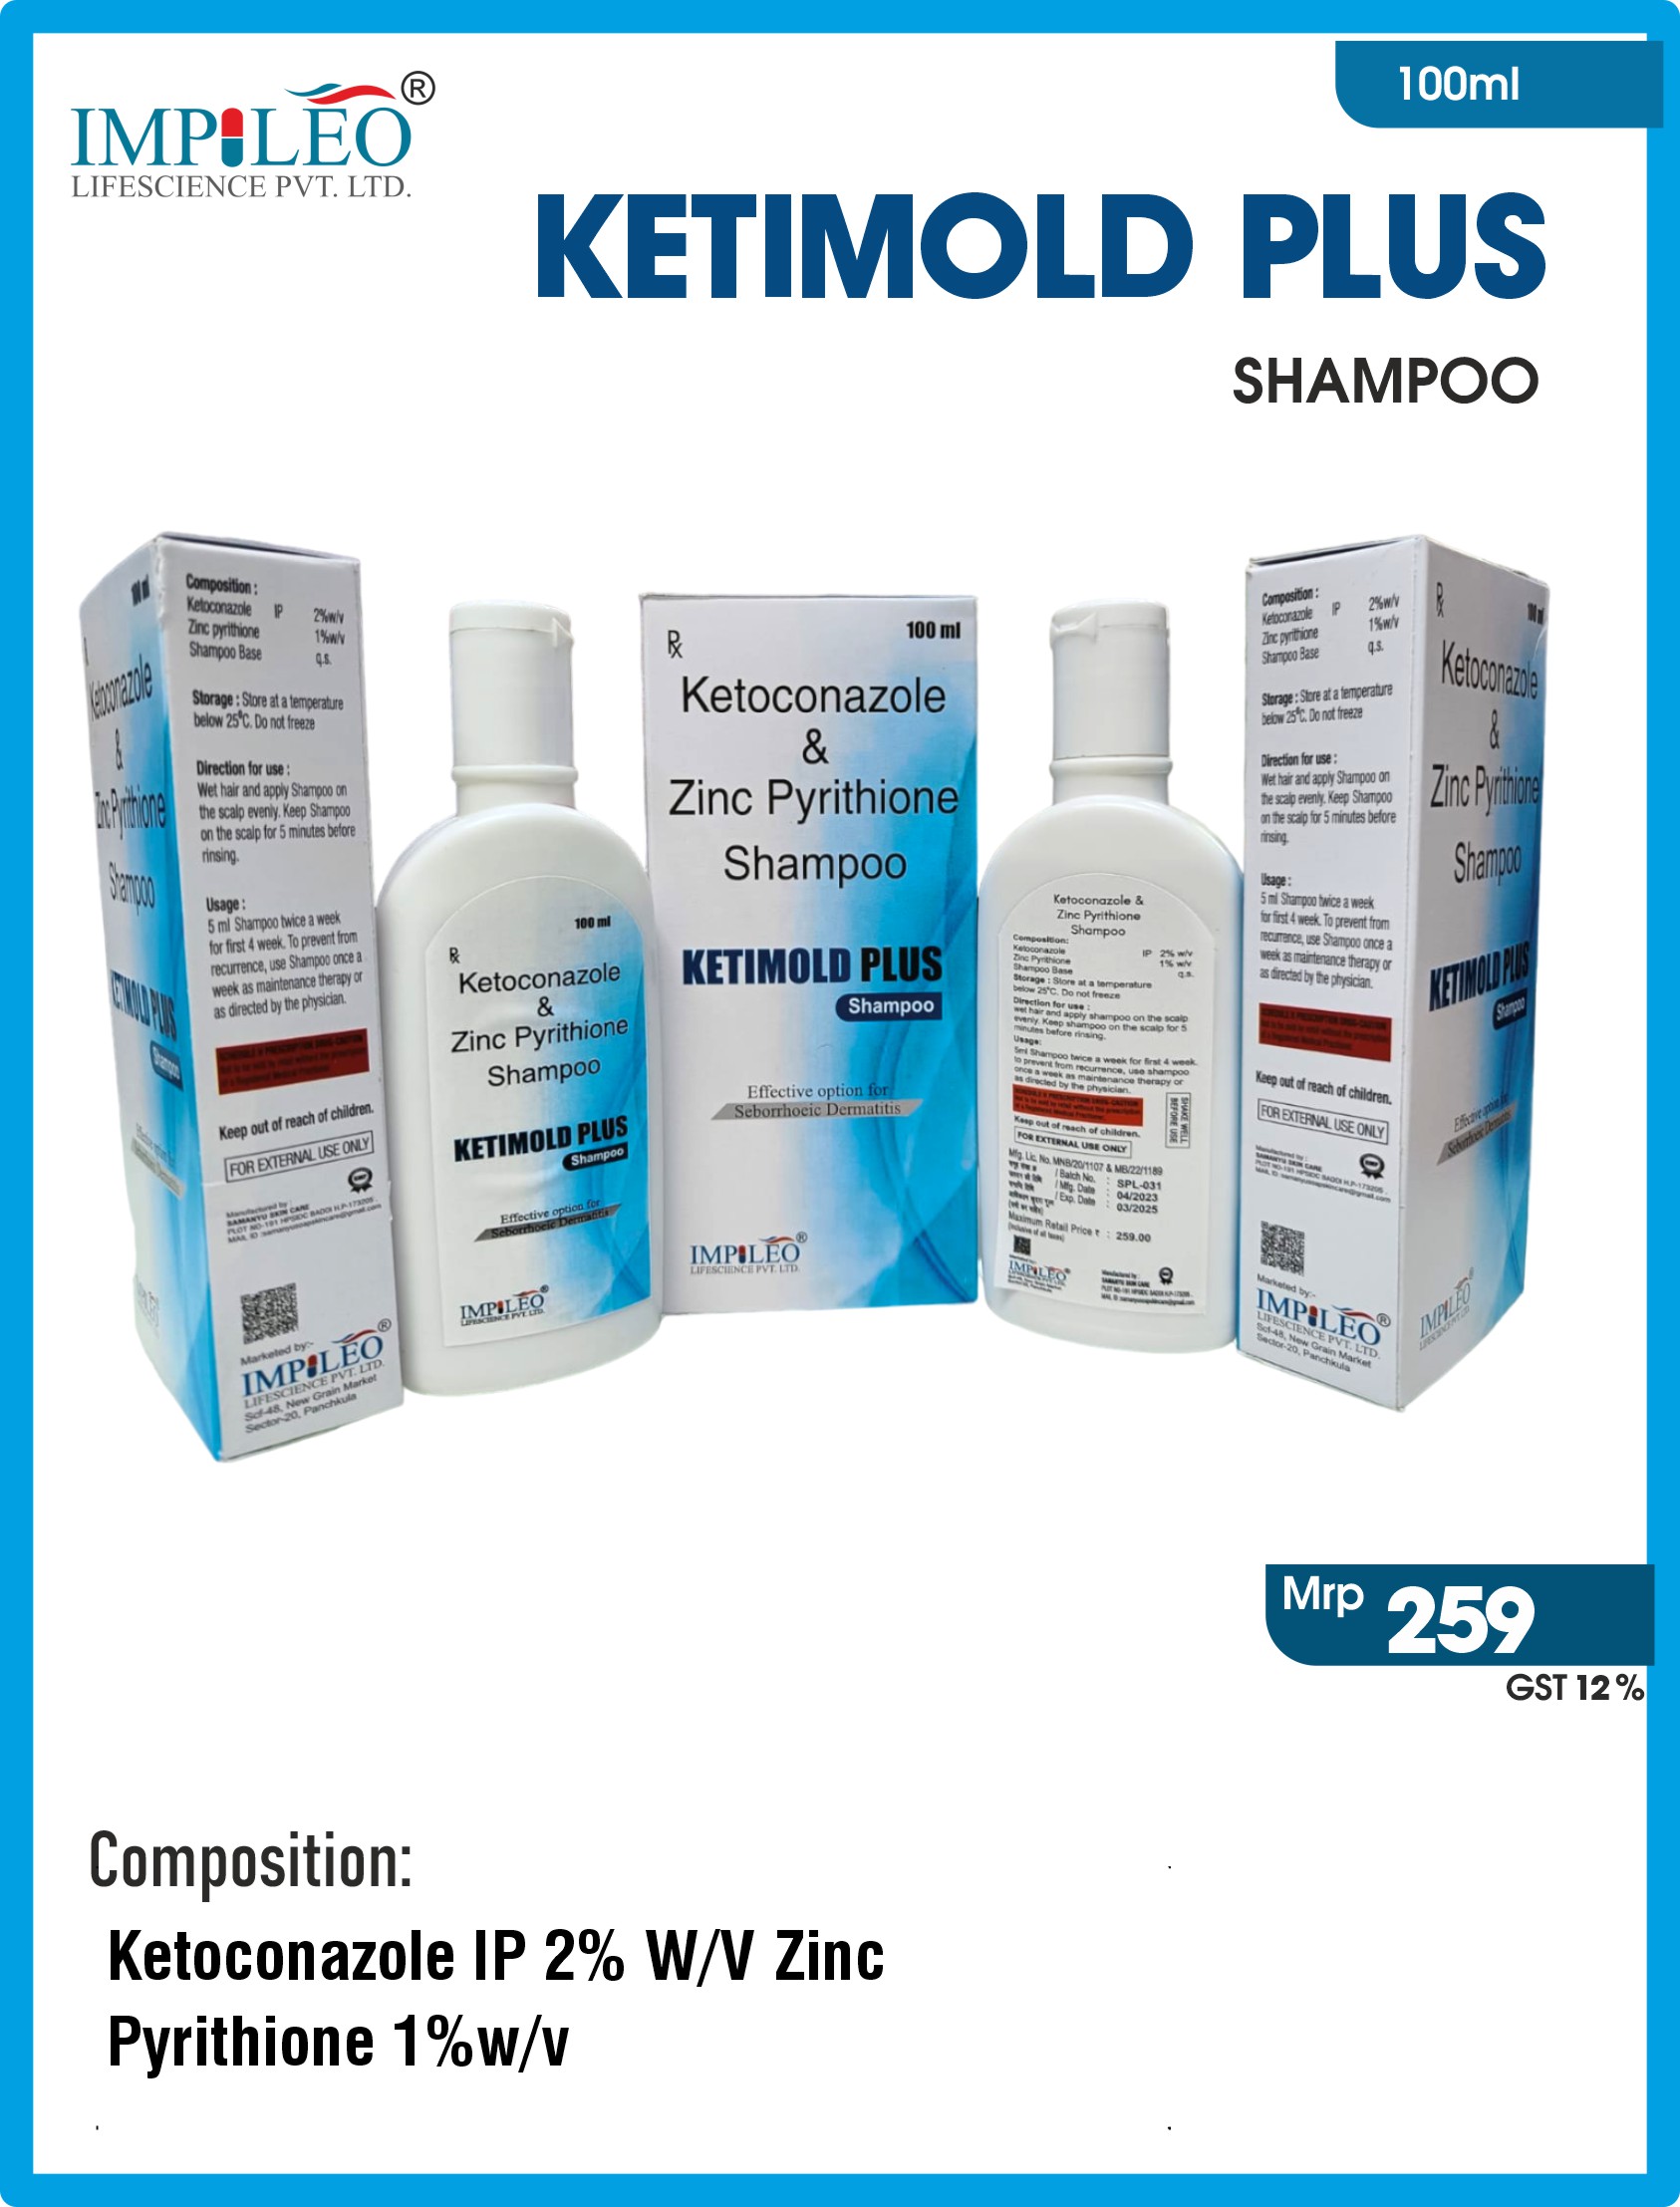 Top PCD Pharma Franchise in India Offers KETIMOLD PLUS Shampoo for Scalp Health